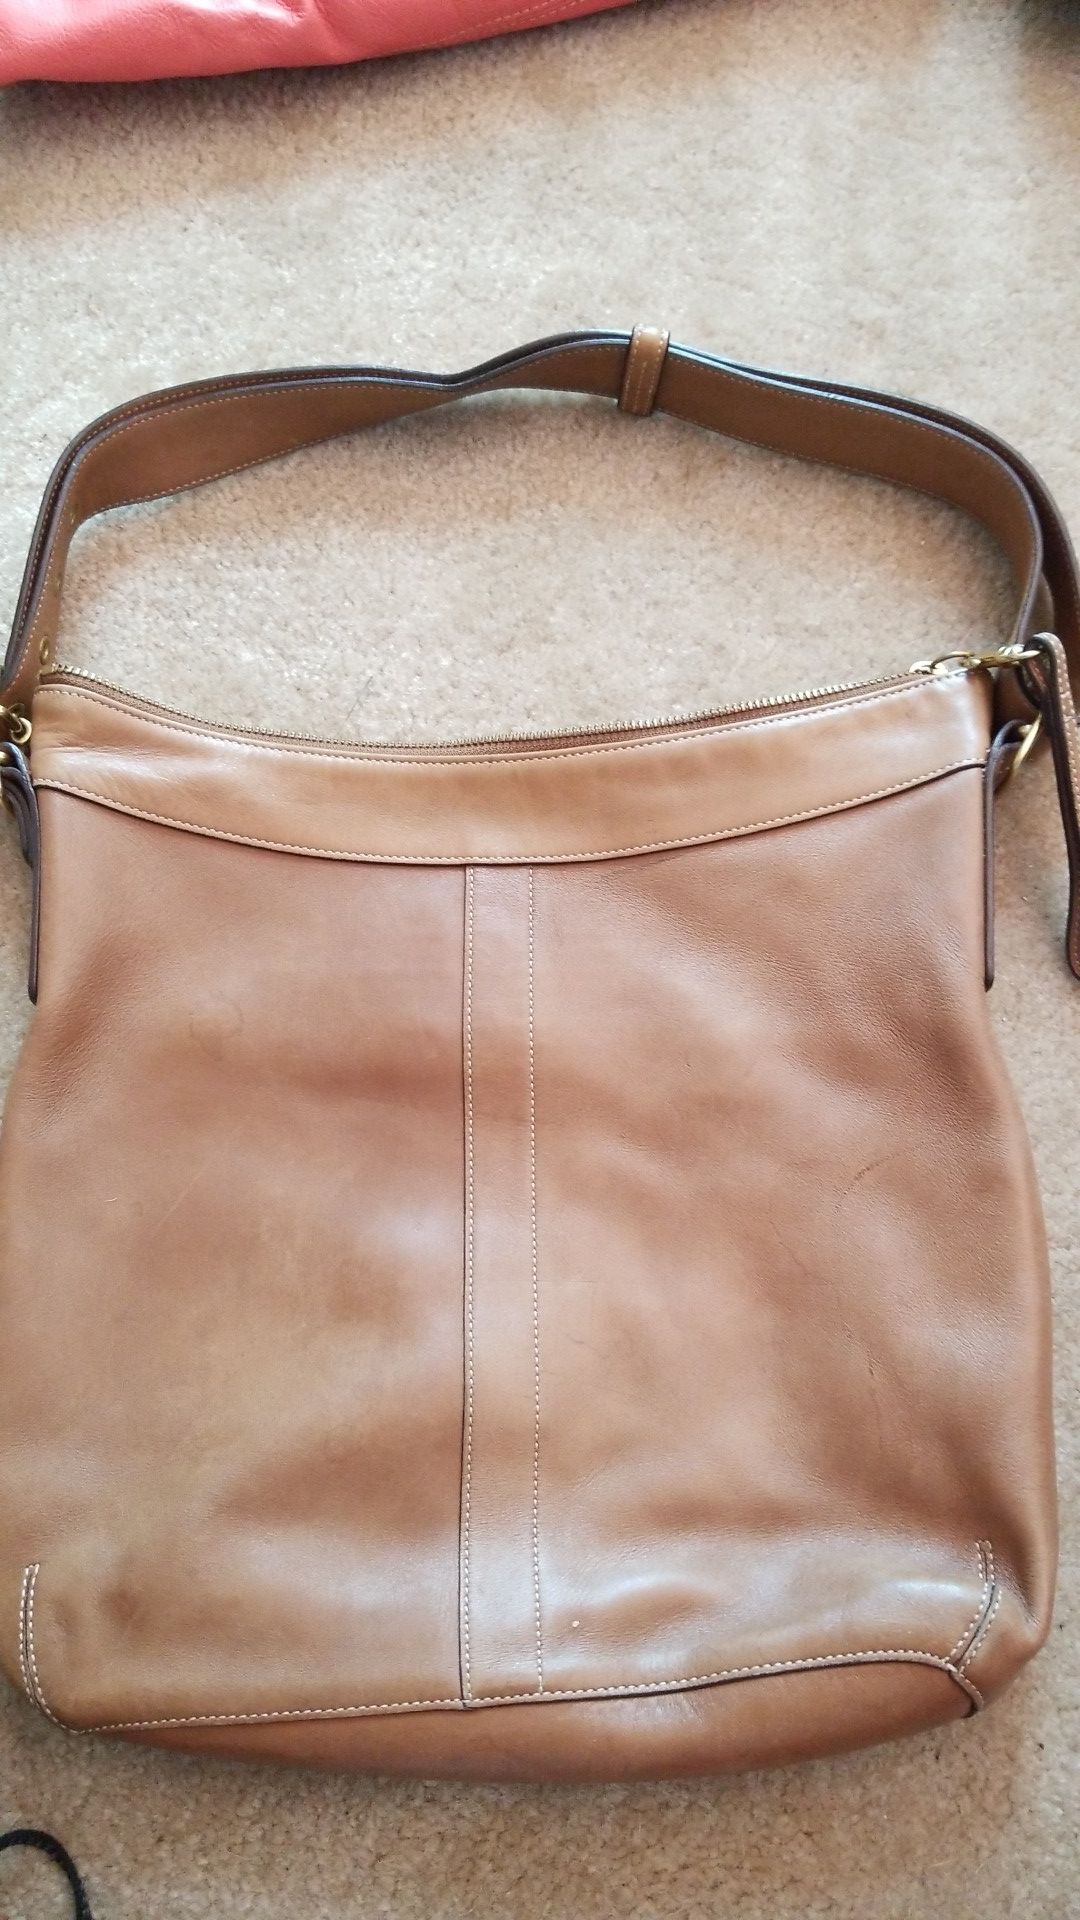 Authentic Coach Brown Leather Purse Handbag Tote